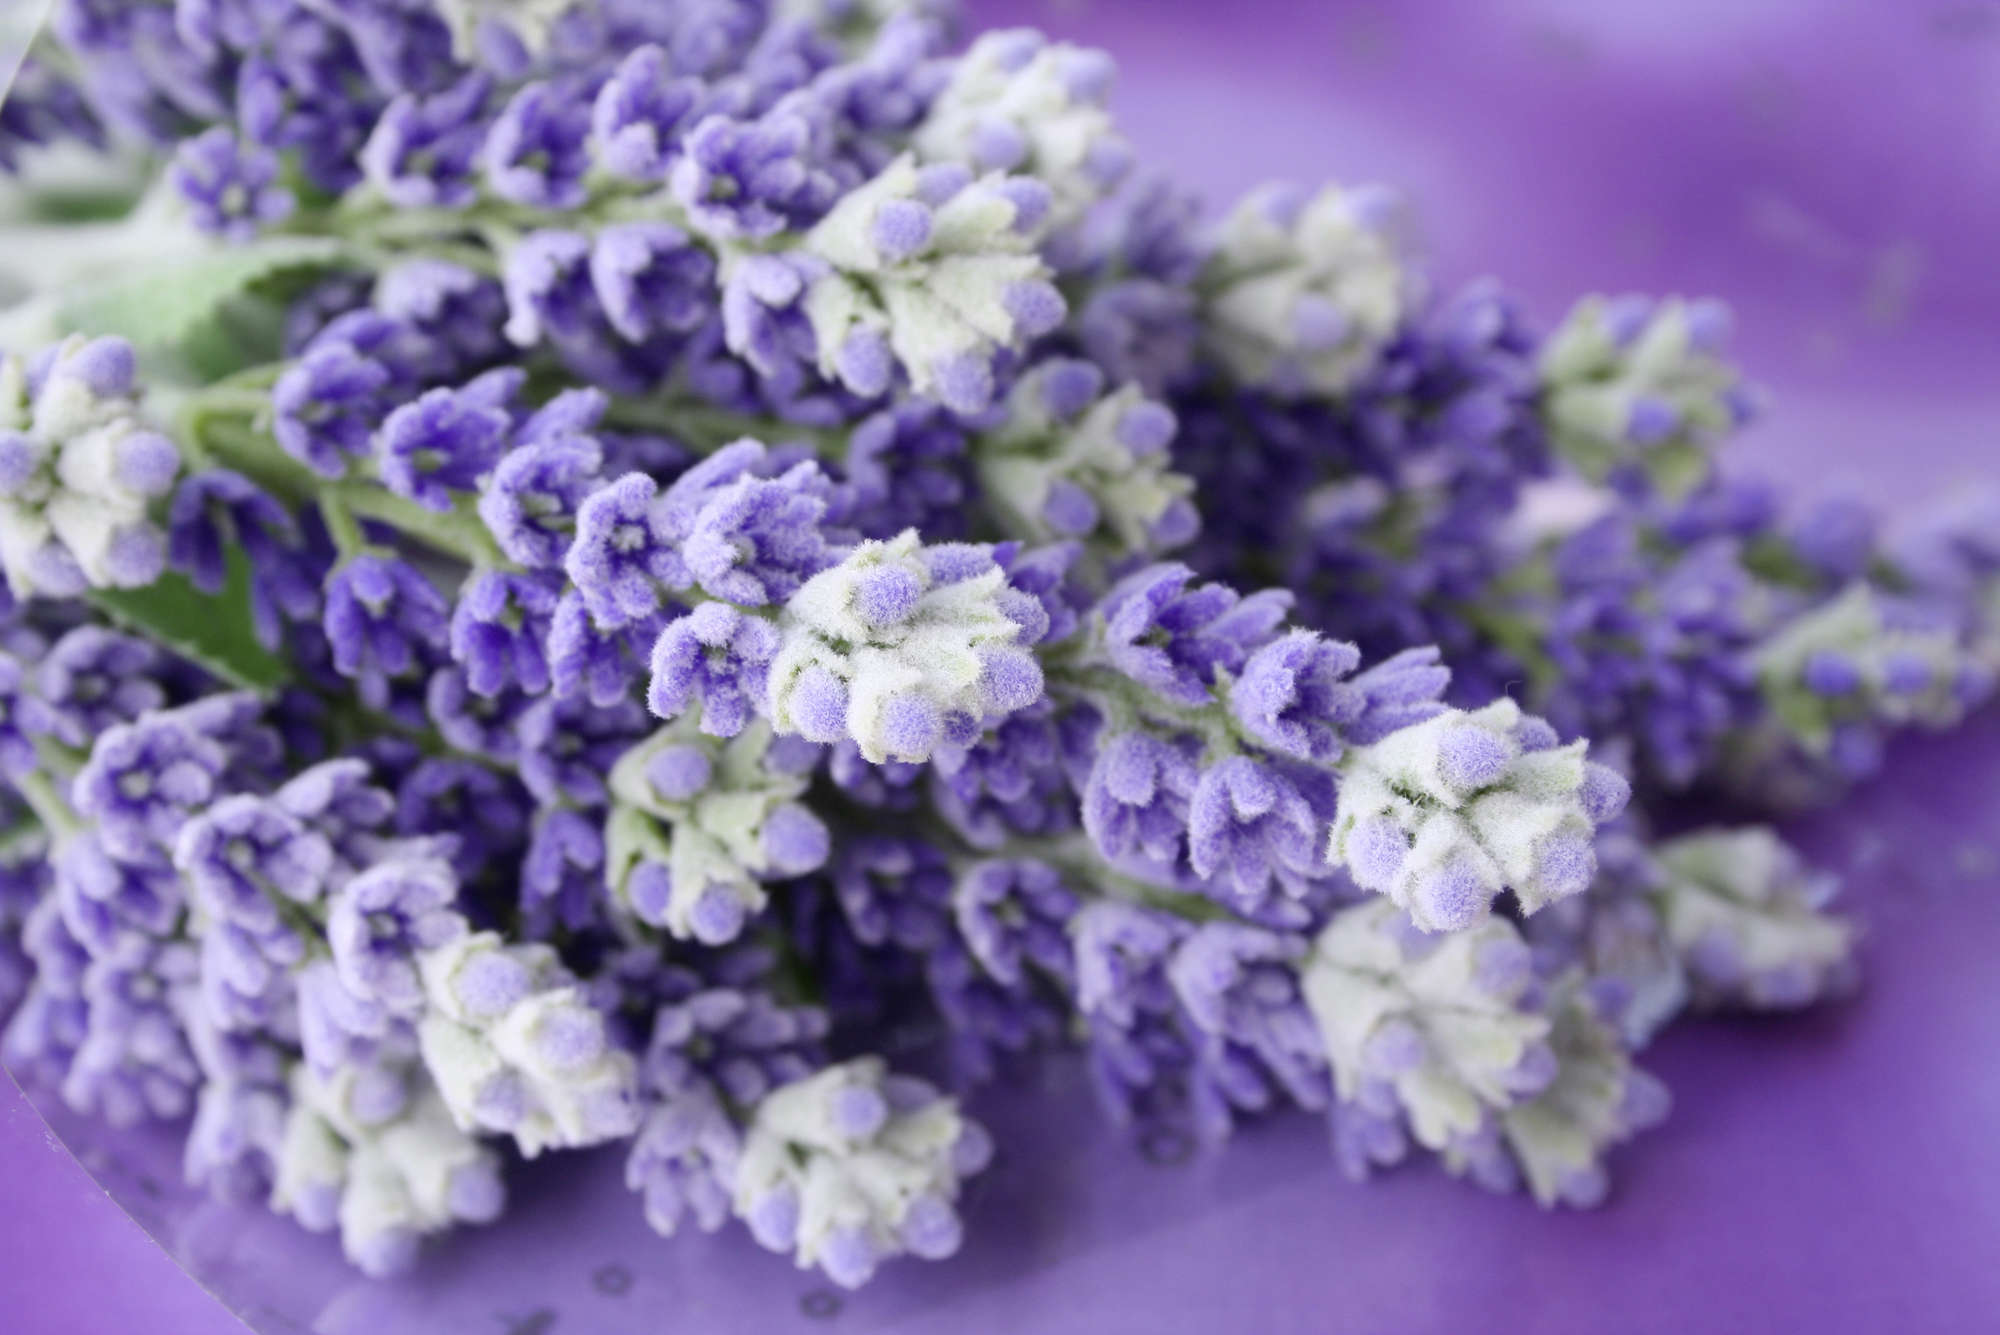             Fototapete Nahaufnahme von Lavendel – Premium Glattvlies
        